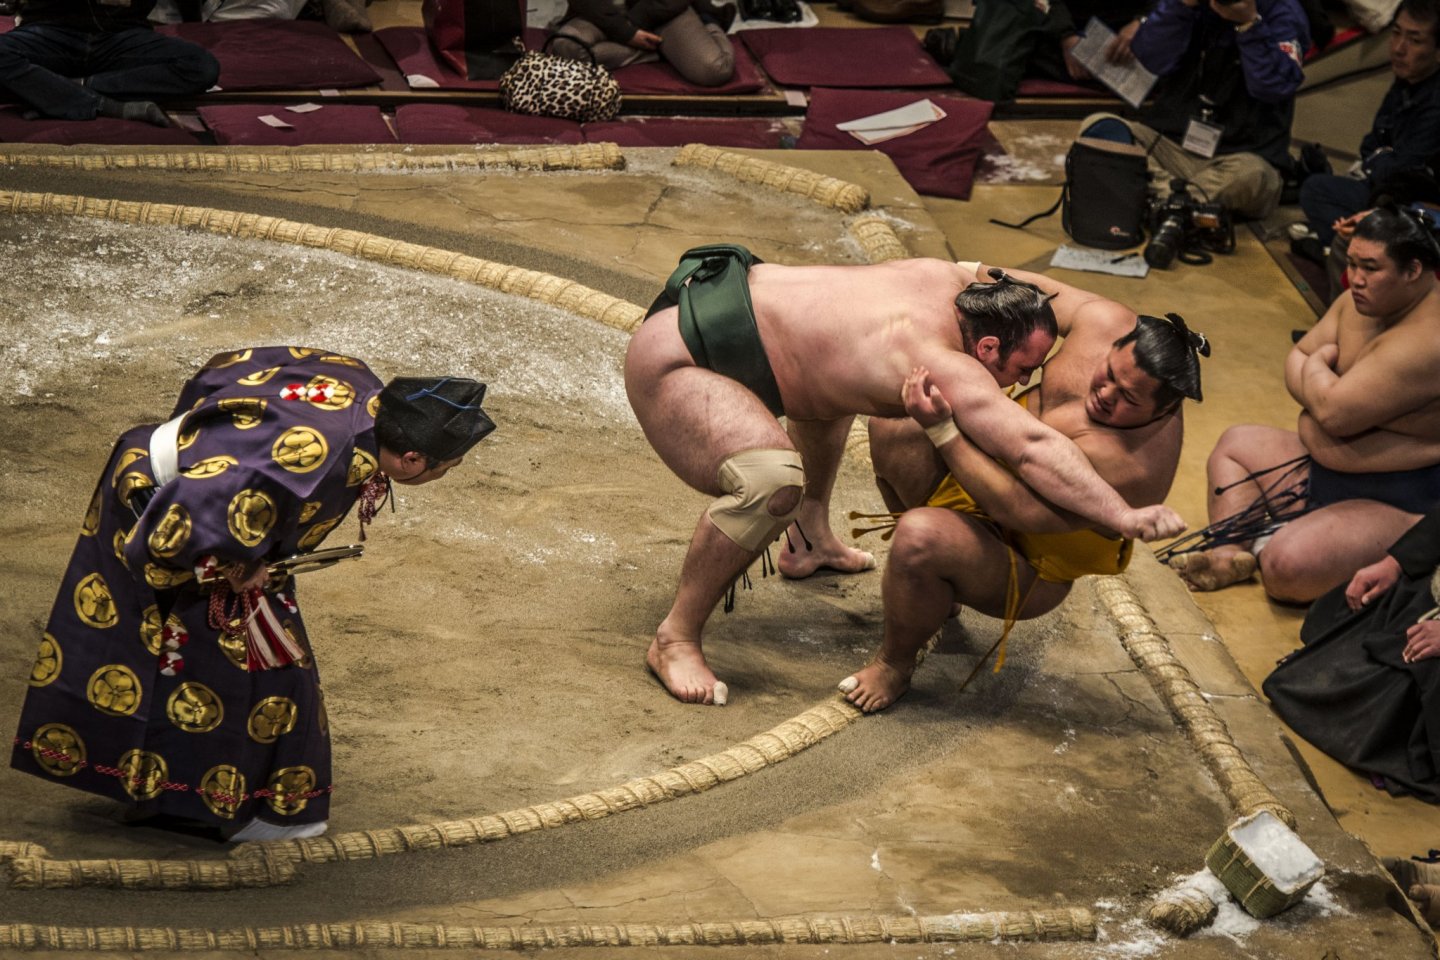 Sumo wrestlers in action